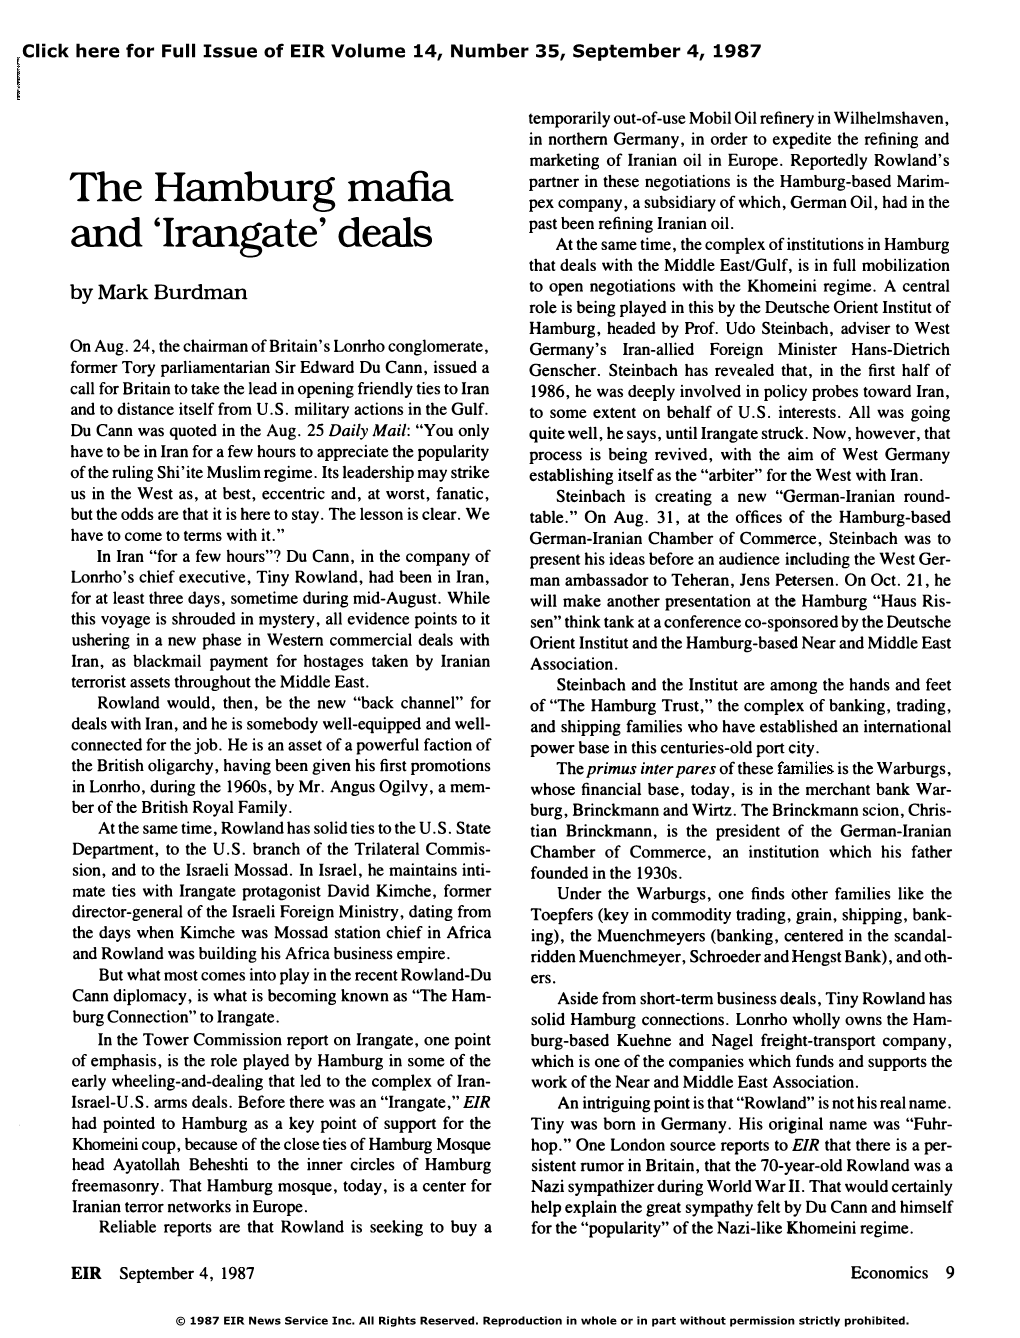 The Hamburg Mafia and 'Irangate' Deals